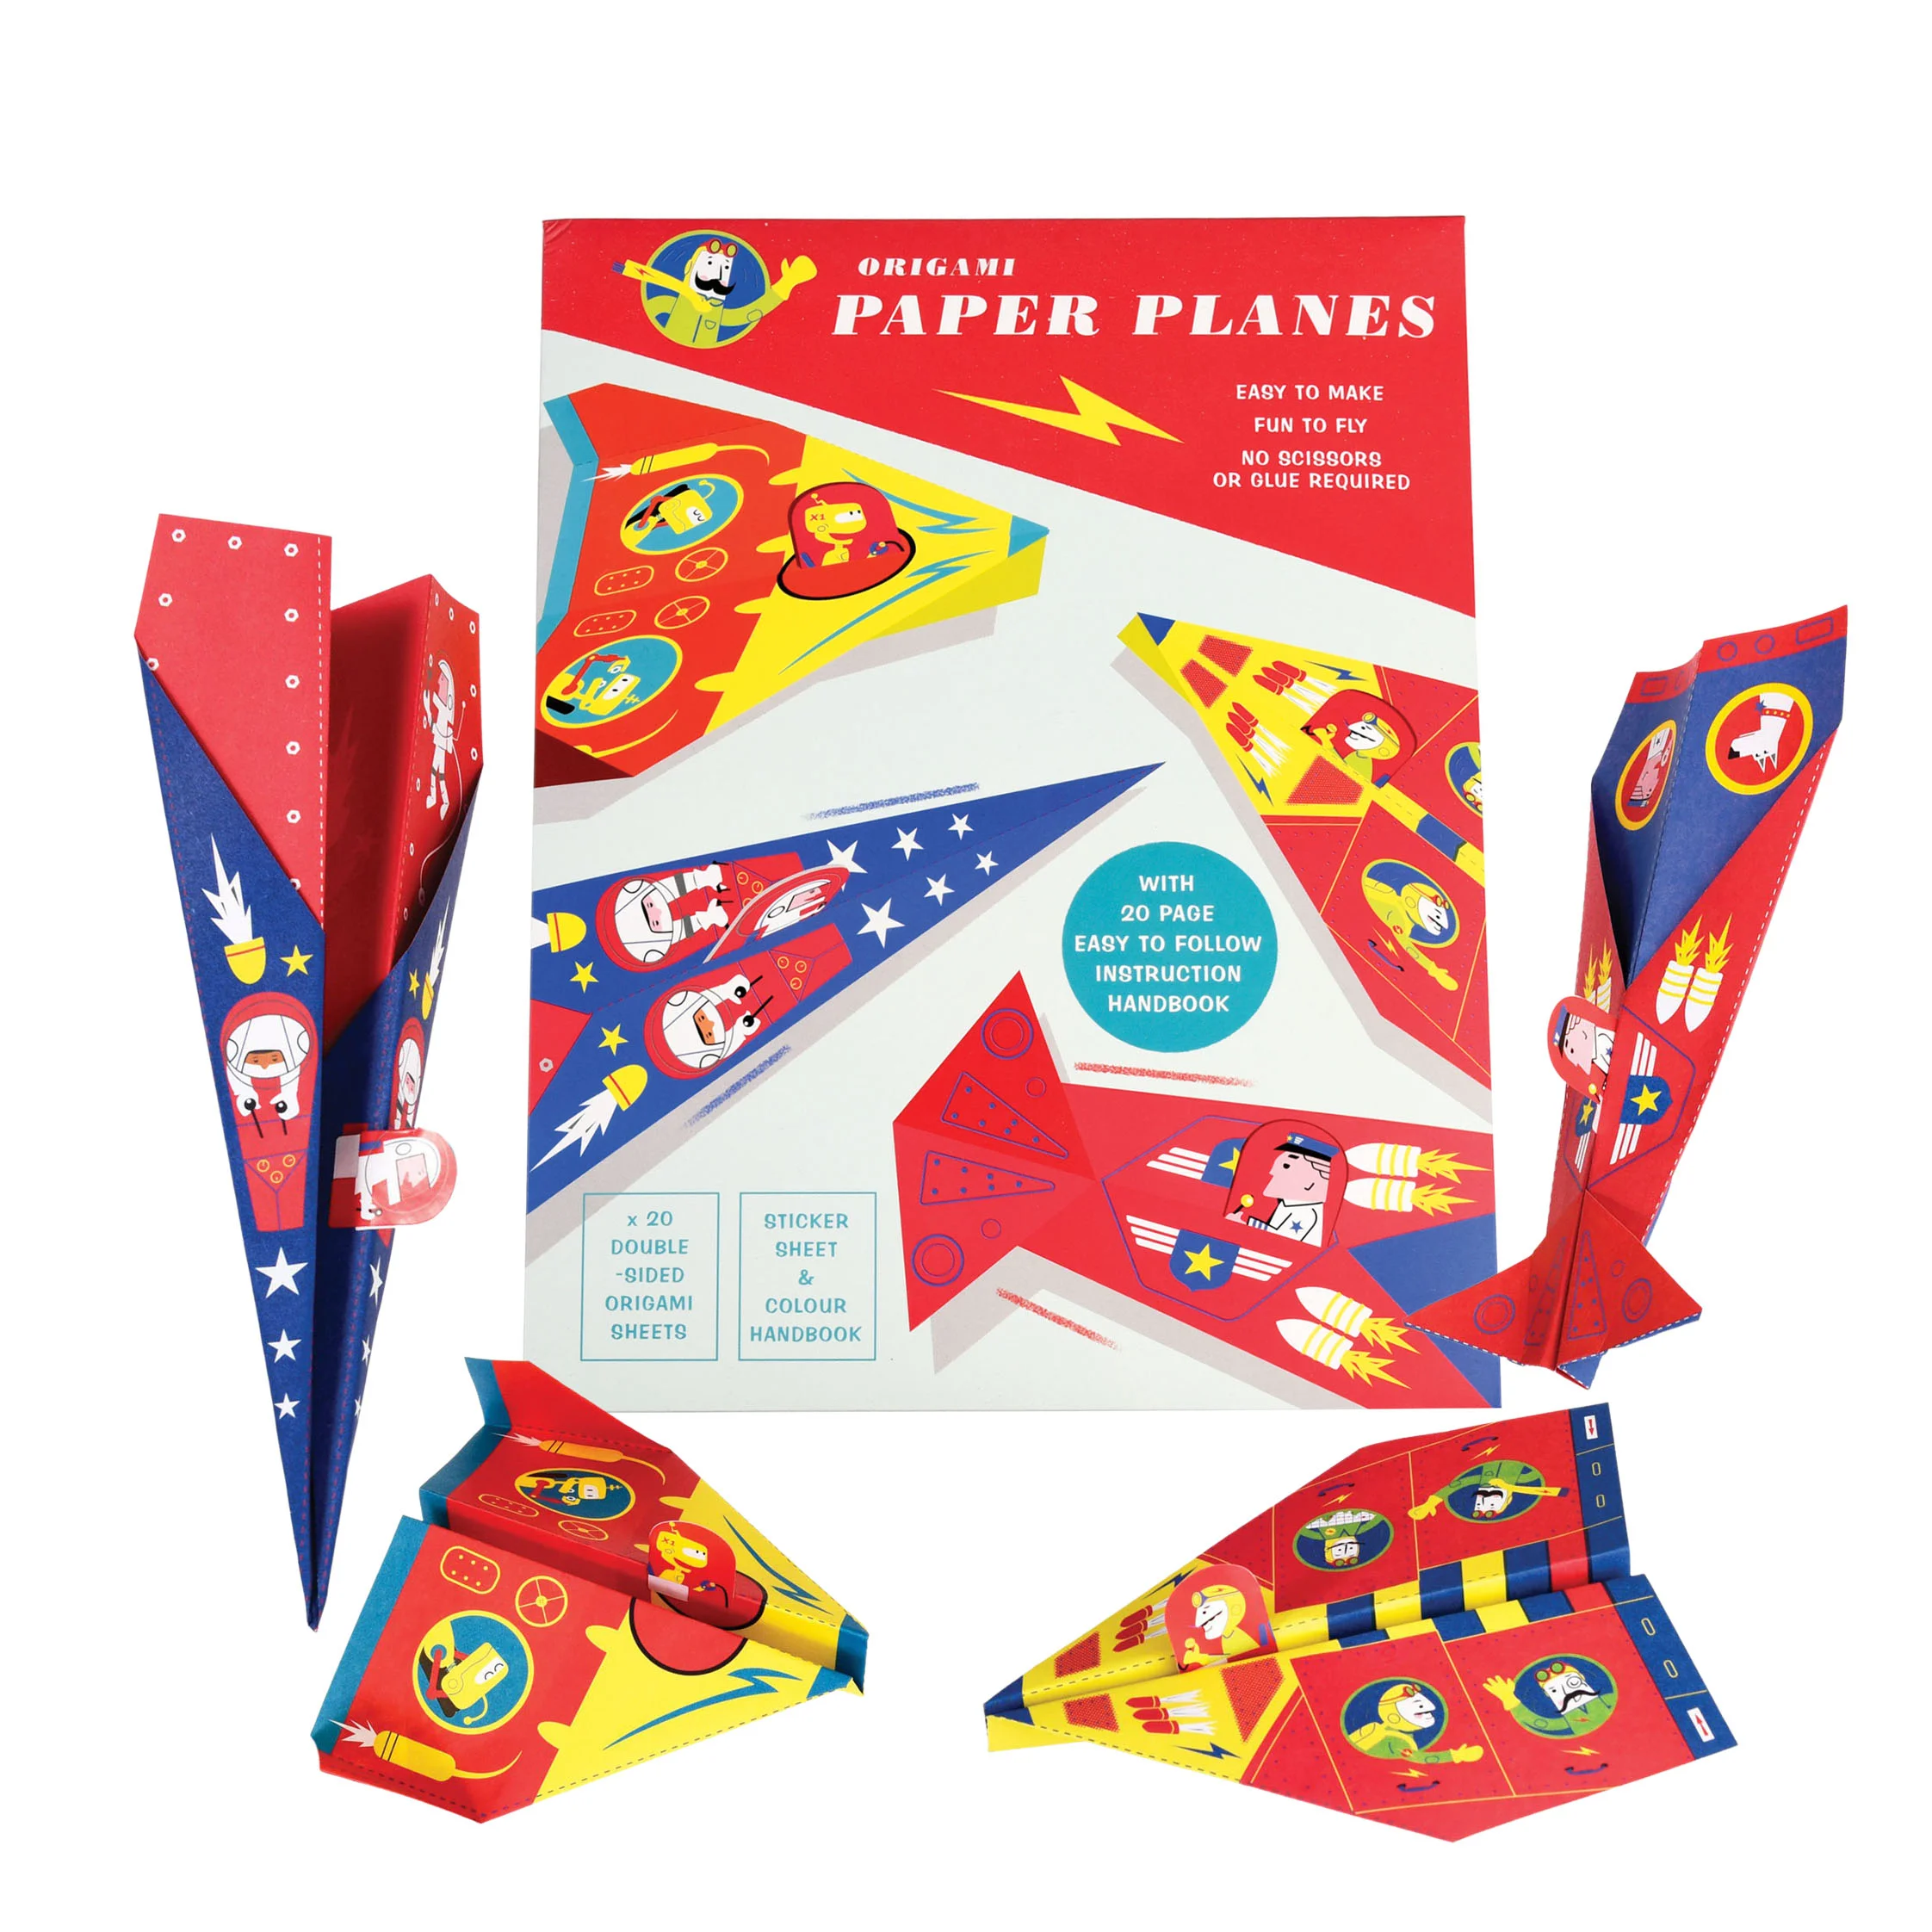 children's origami kit - paper planes